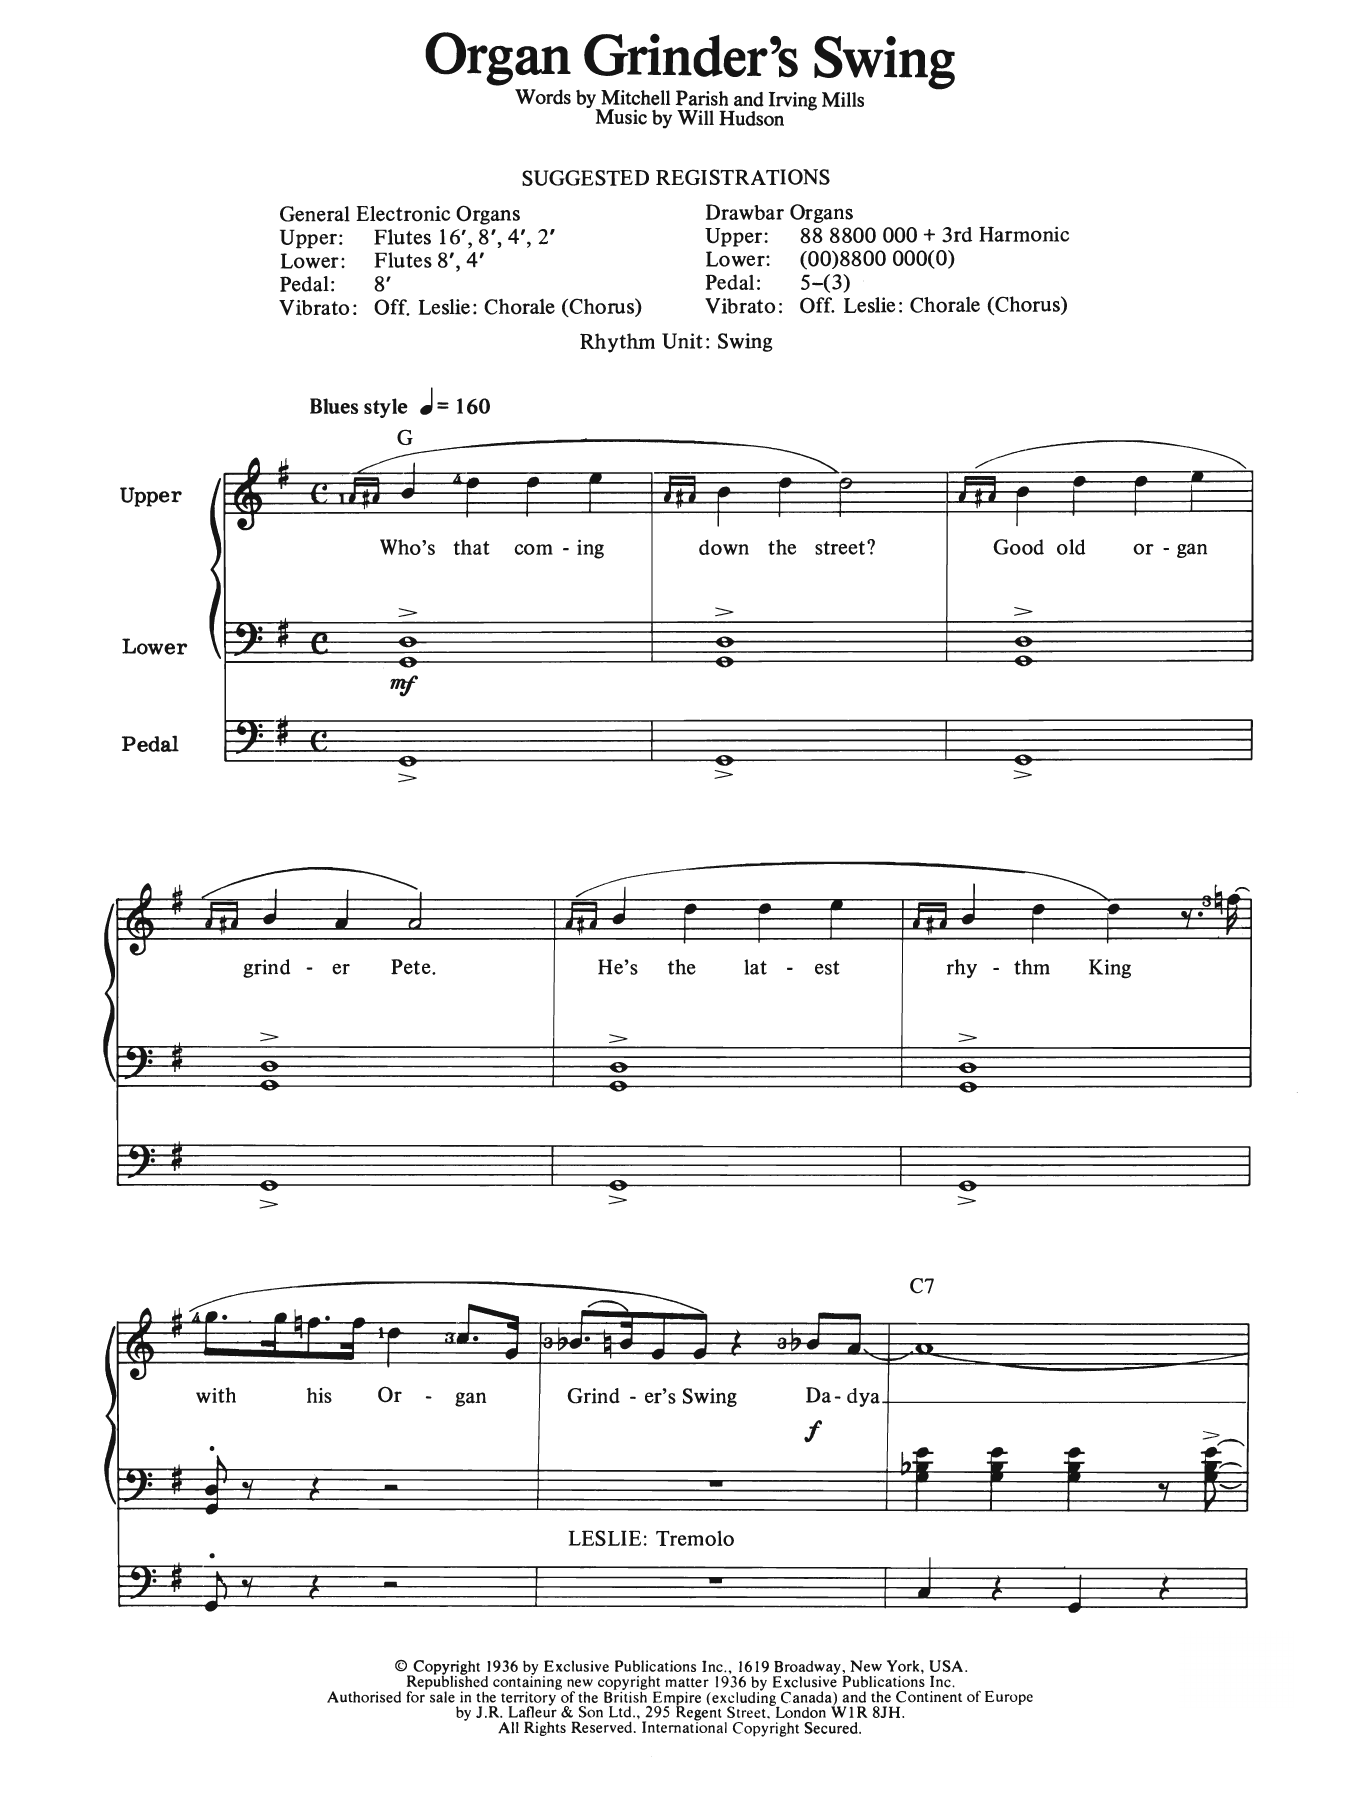 Will Hudson Organ Grinder's Swing Sheet Music Notes & Chords for Organ - Download or Print PDF